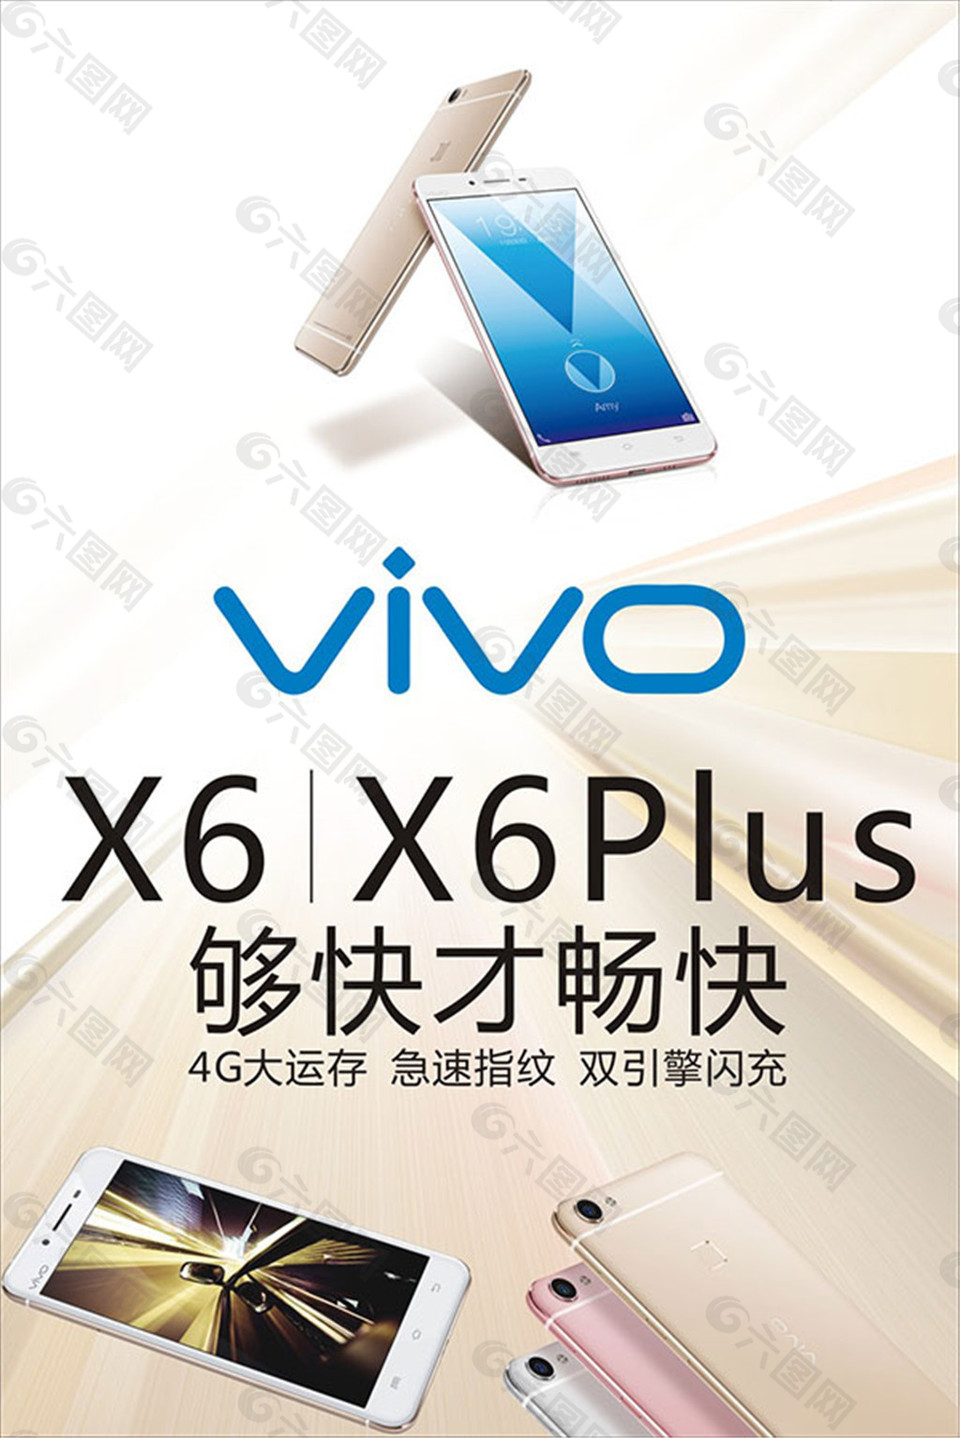 vivox6手机海报平面广告素材免费下载(图片编号:8312412)